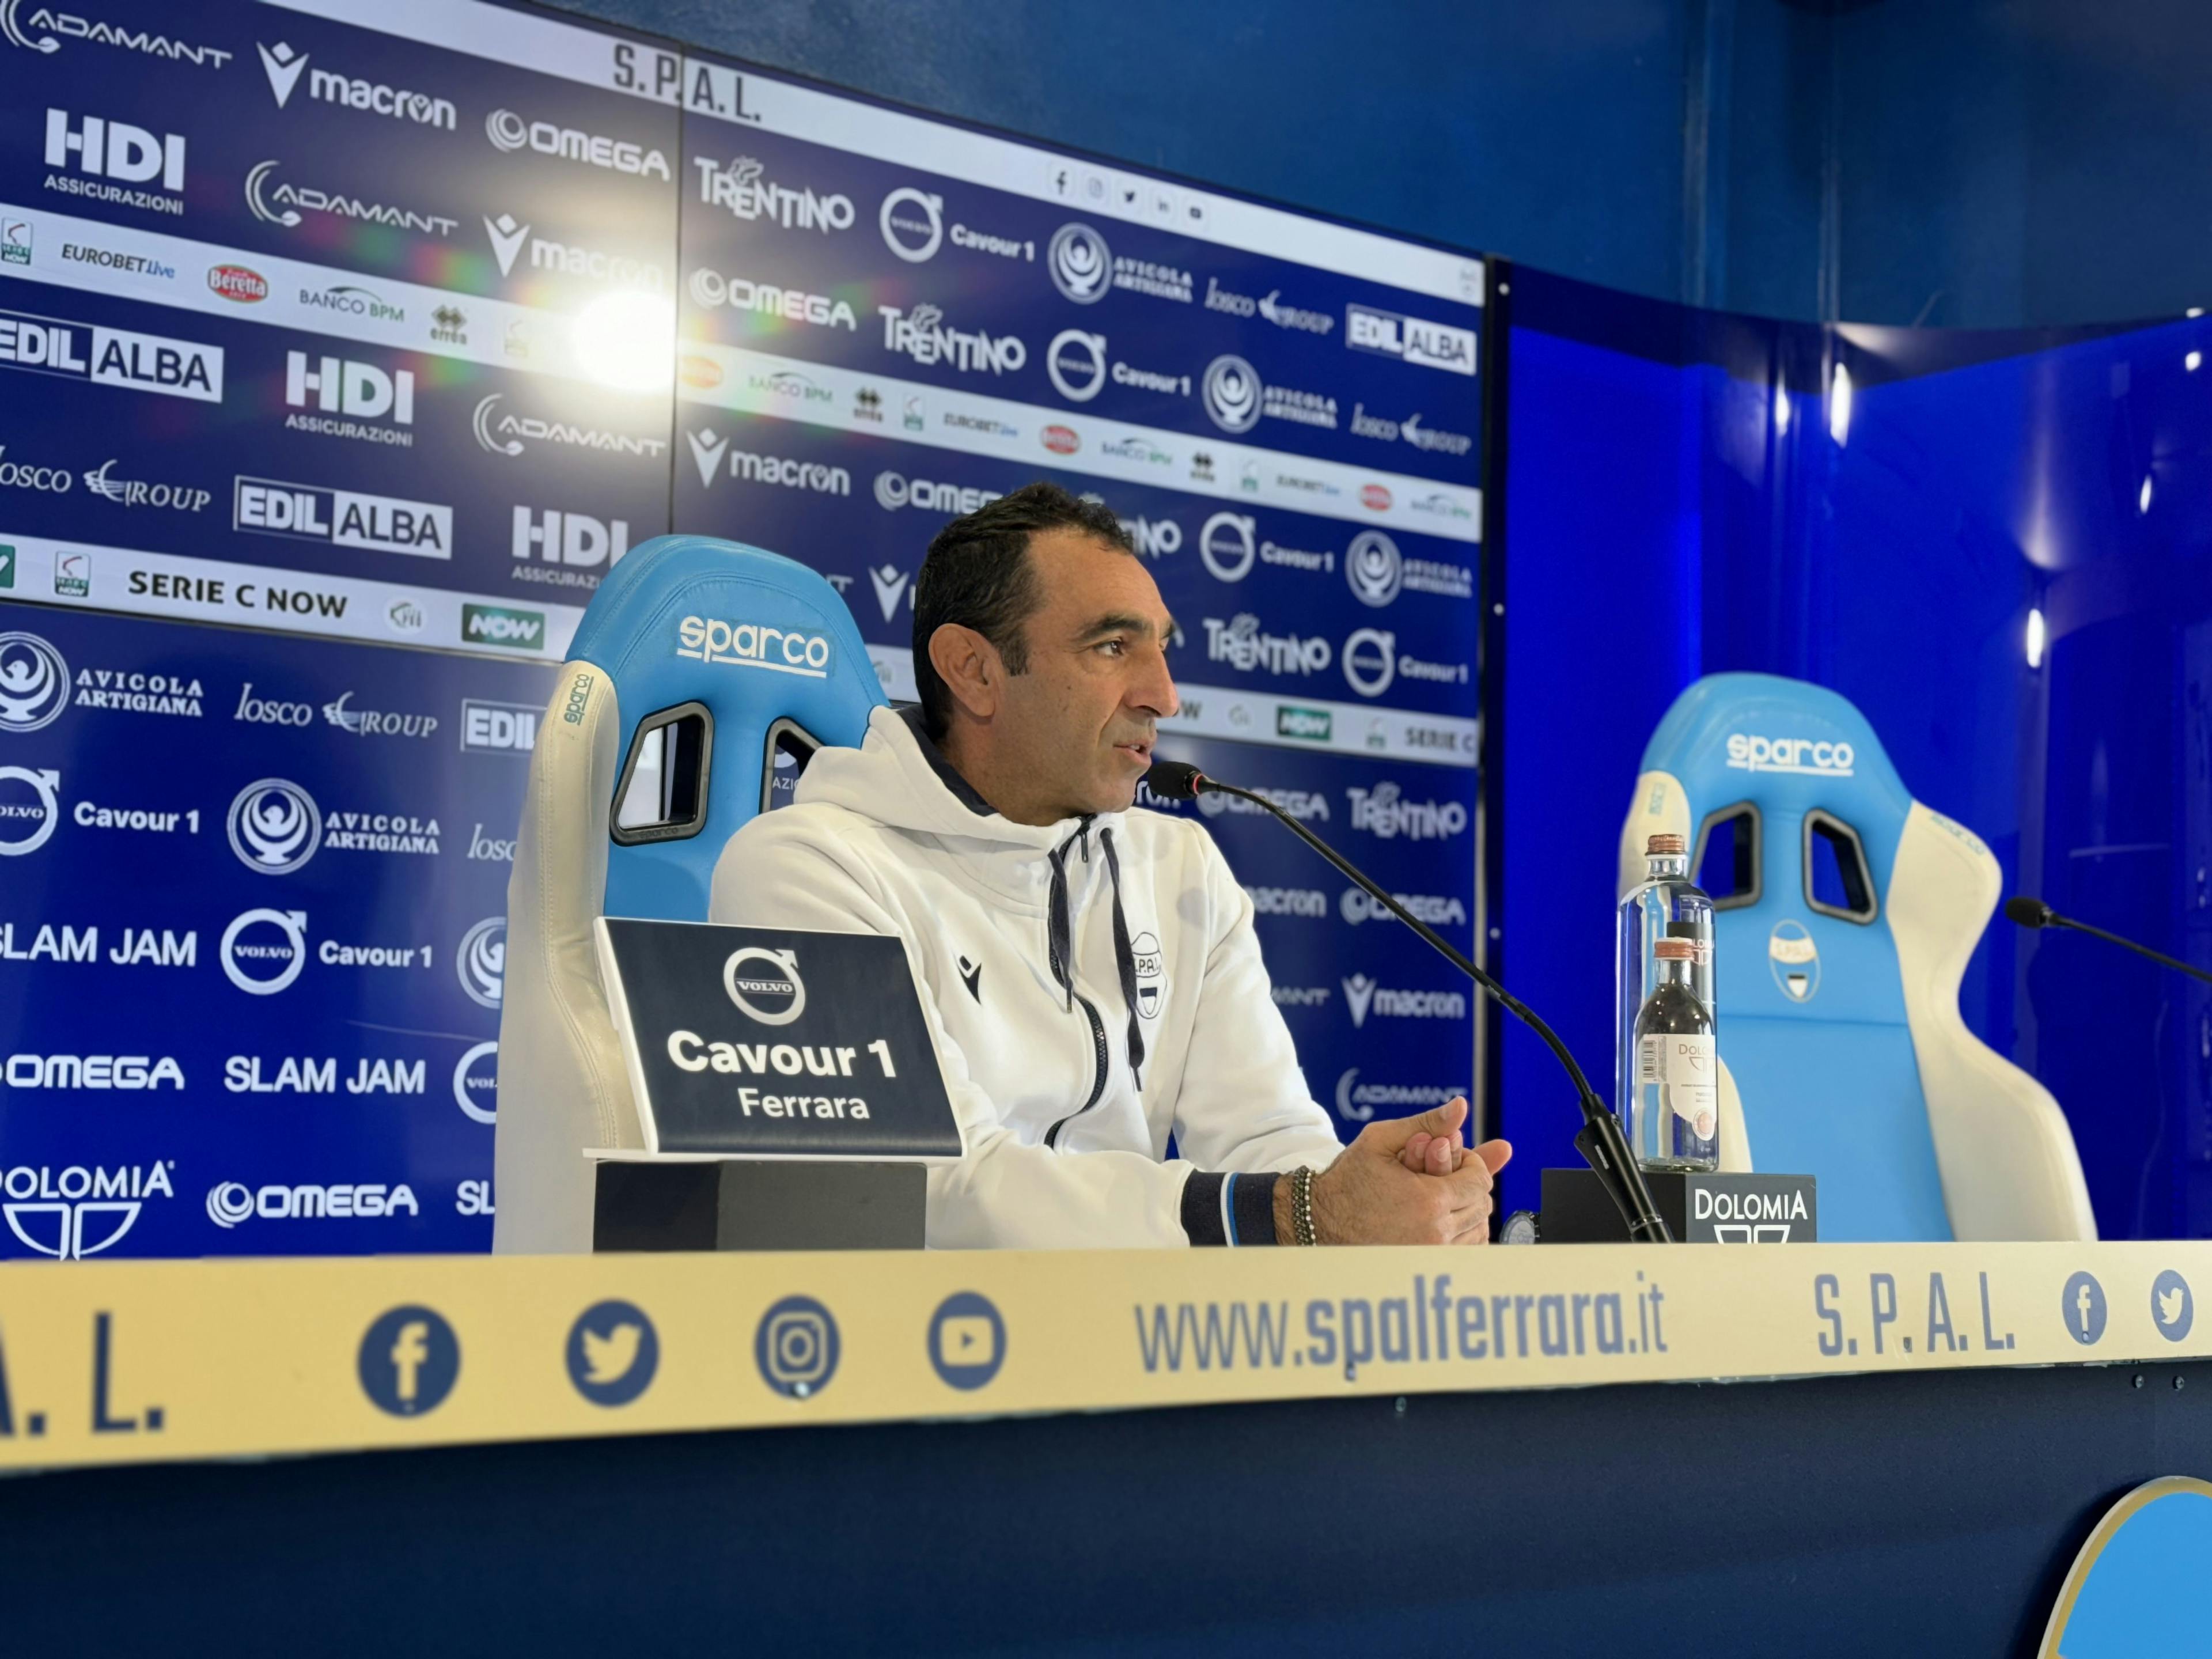 SPAL - Cesena, coach Colucci's pre-match conference